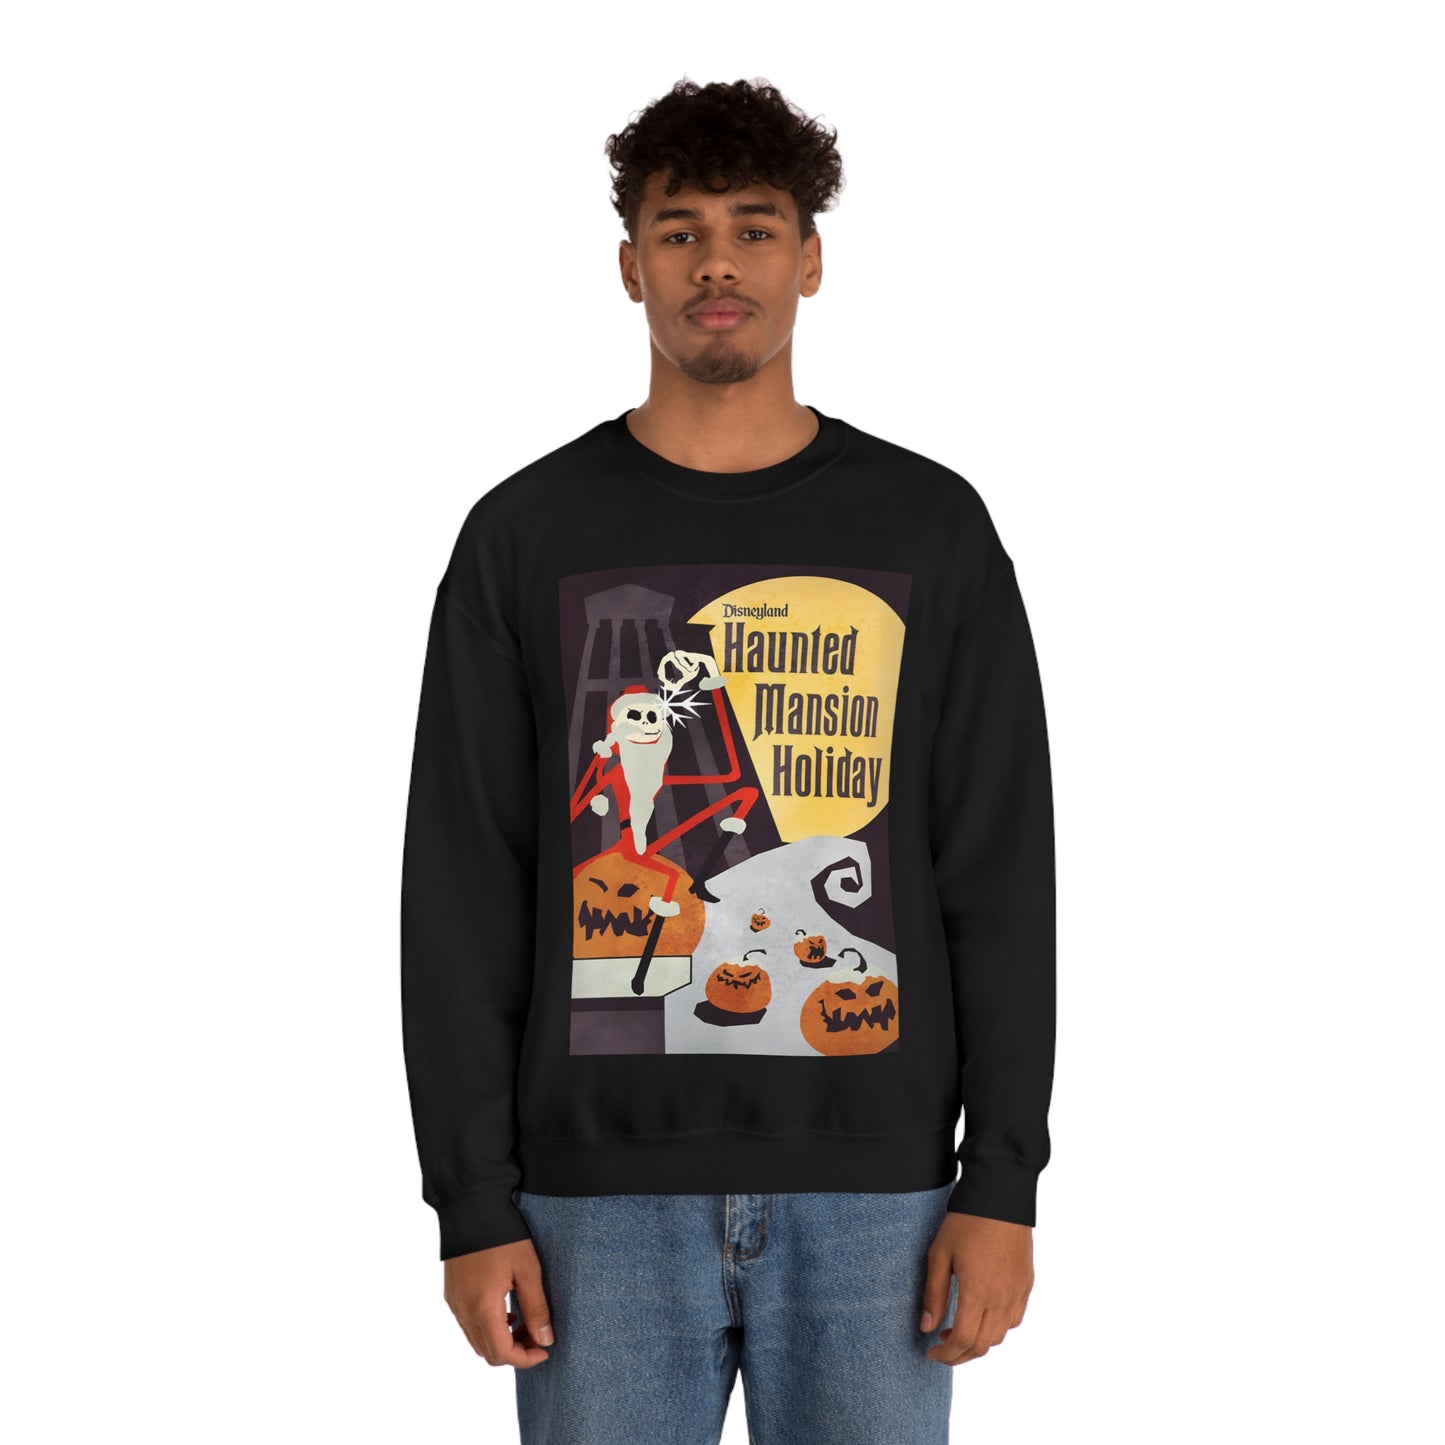 Haunted Mansion Holiday Sweatshirt Sweatshirt, Unisex Classic Fit